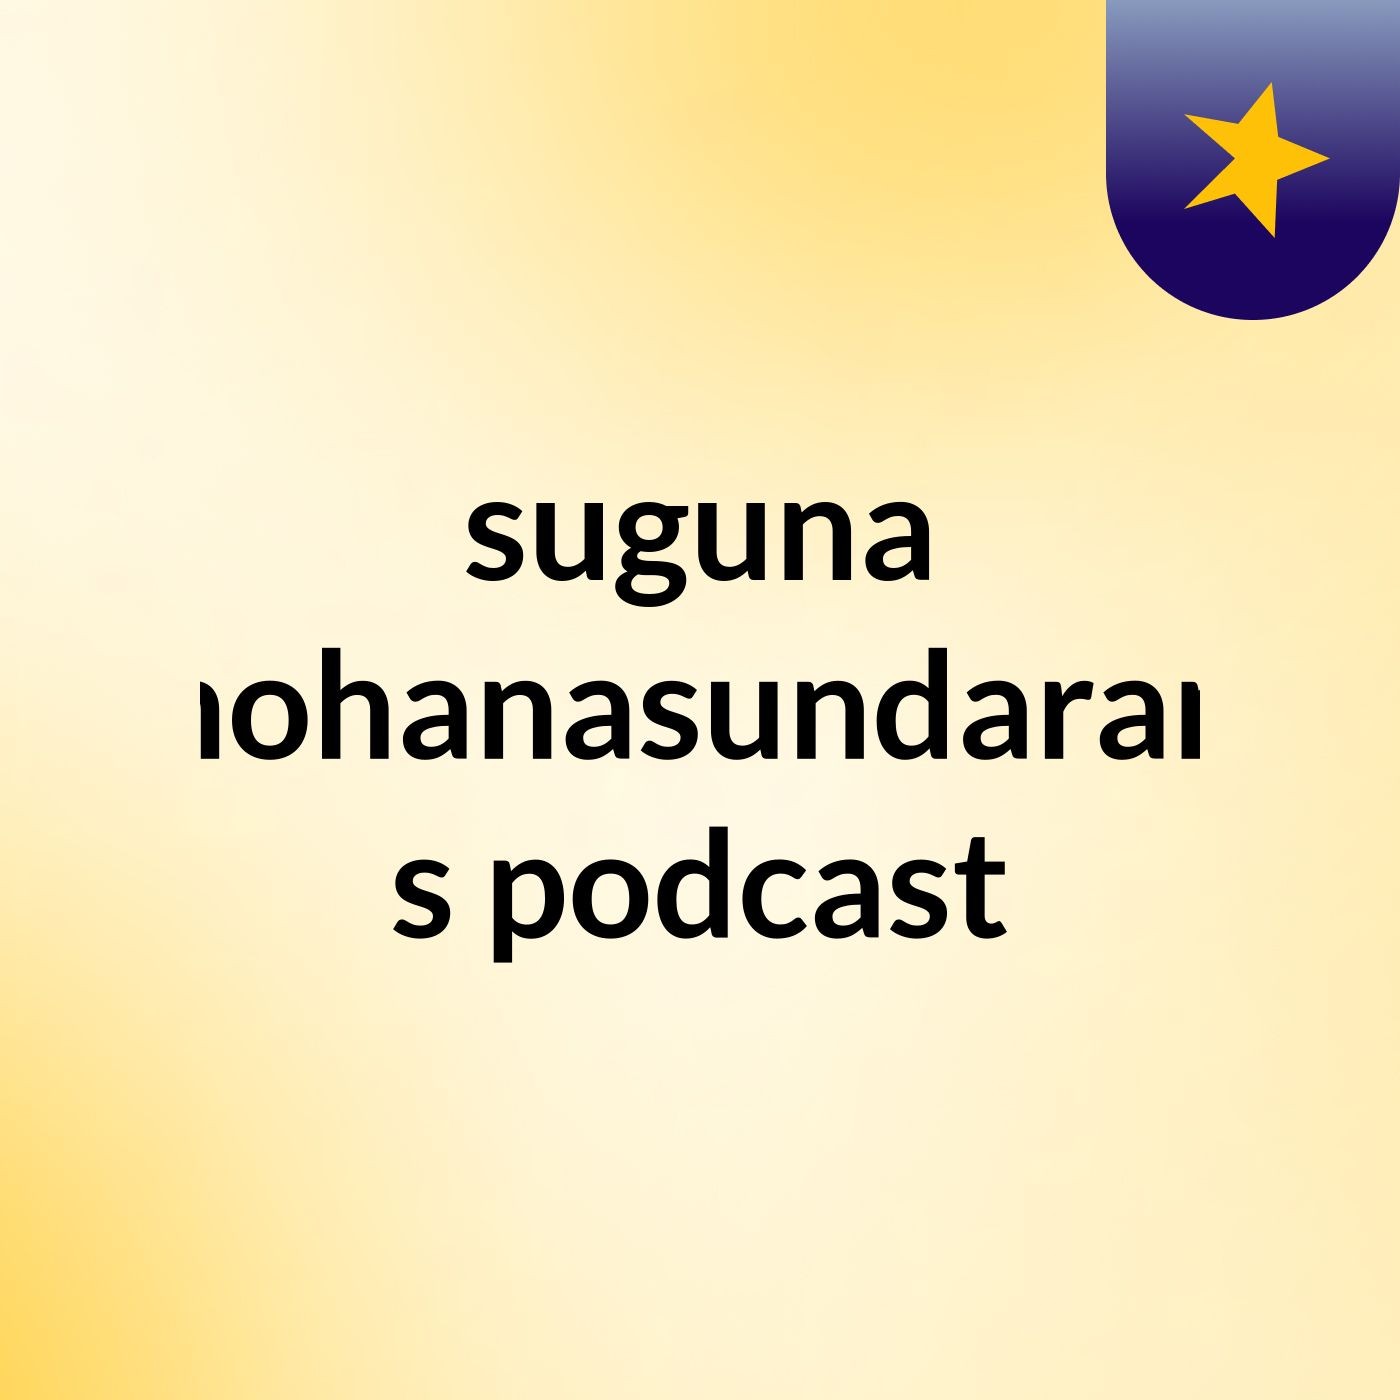 Episode 3 - suguna mohanasundaram's podcast